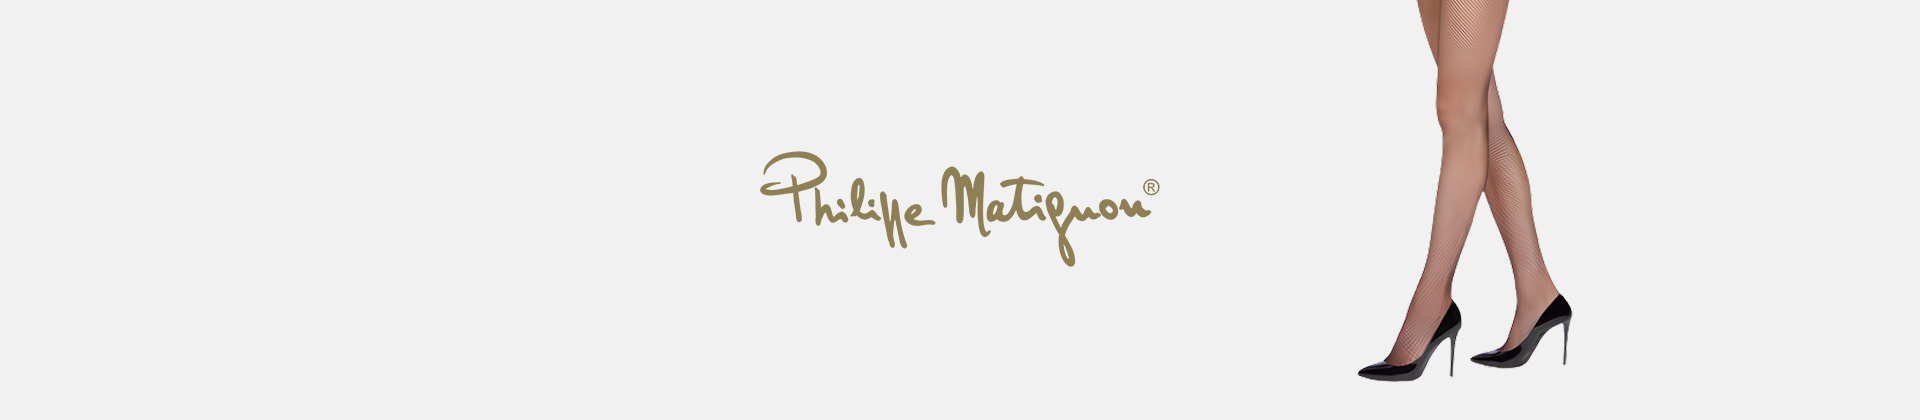 Philippe Matignon socks online